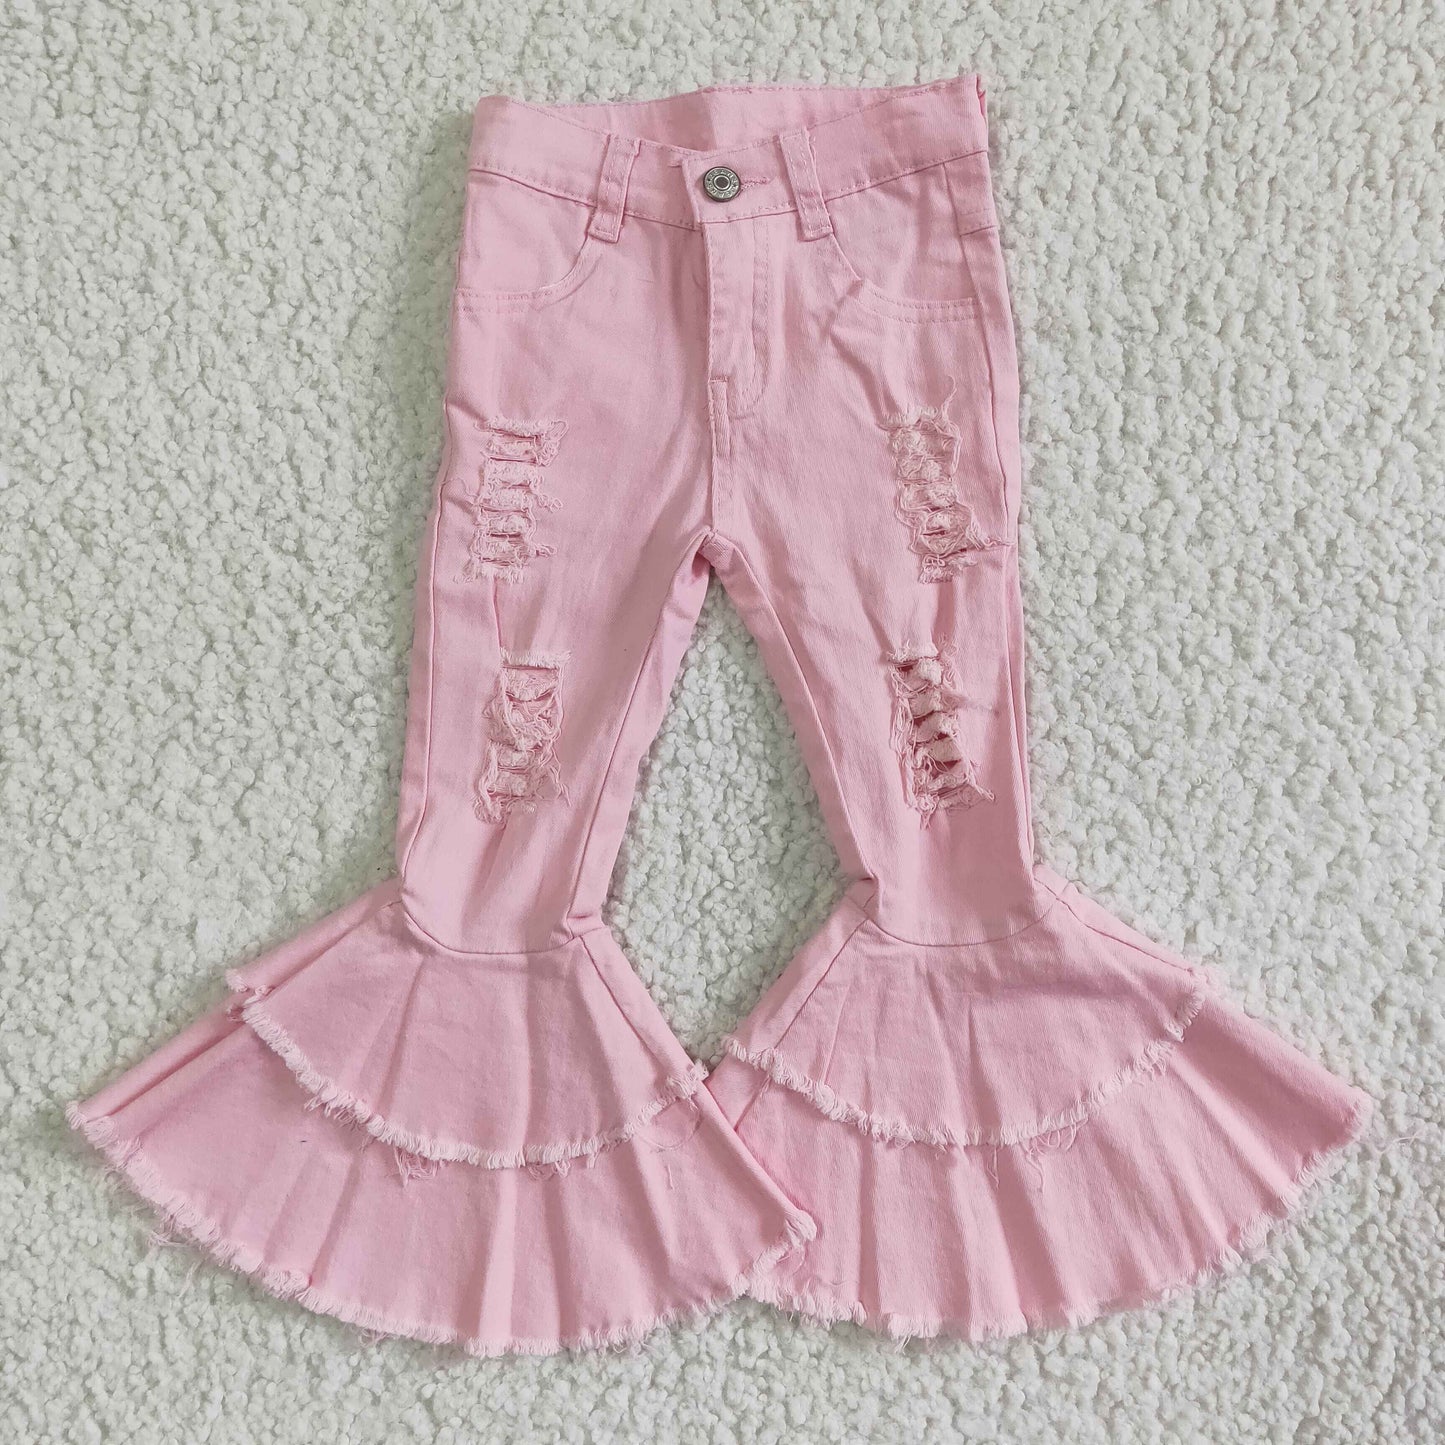 Pink denim pants distressed baby girls jeans